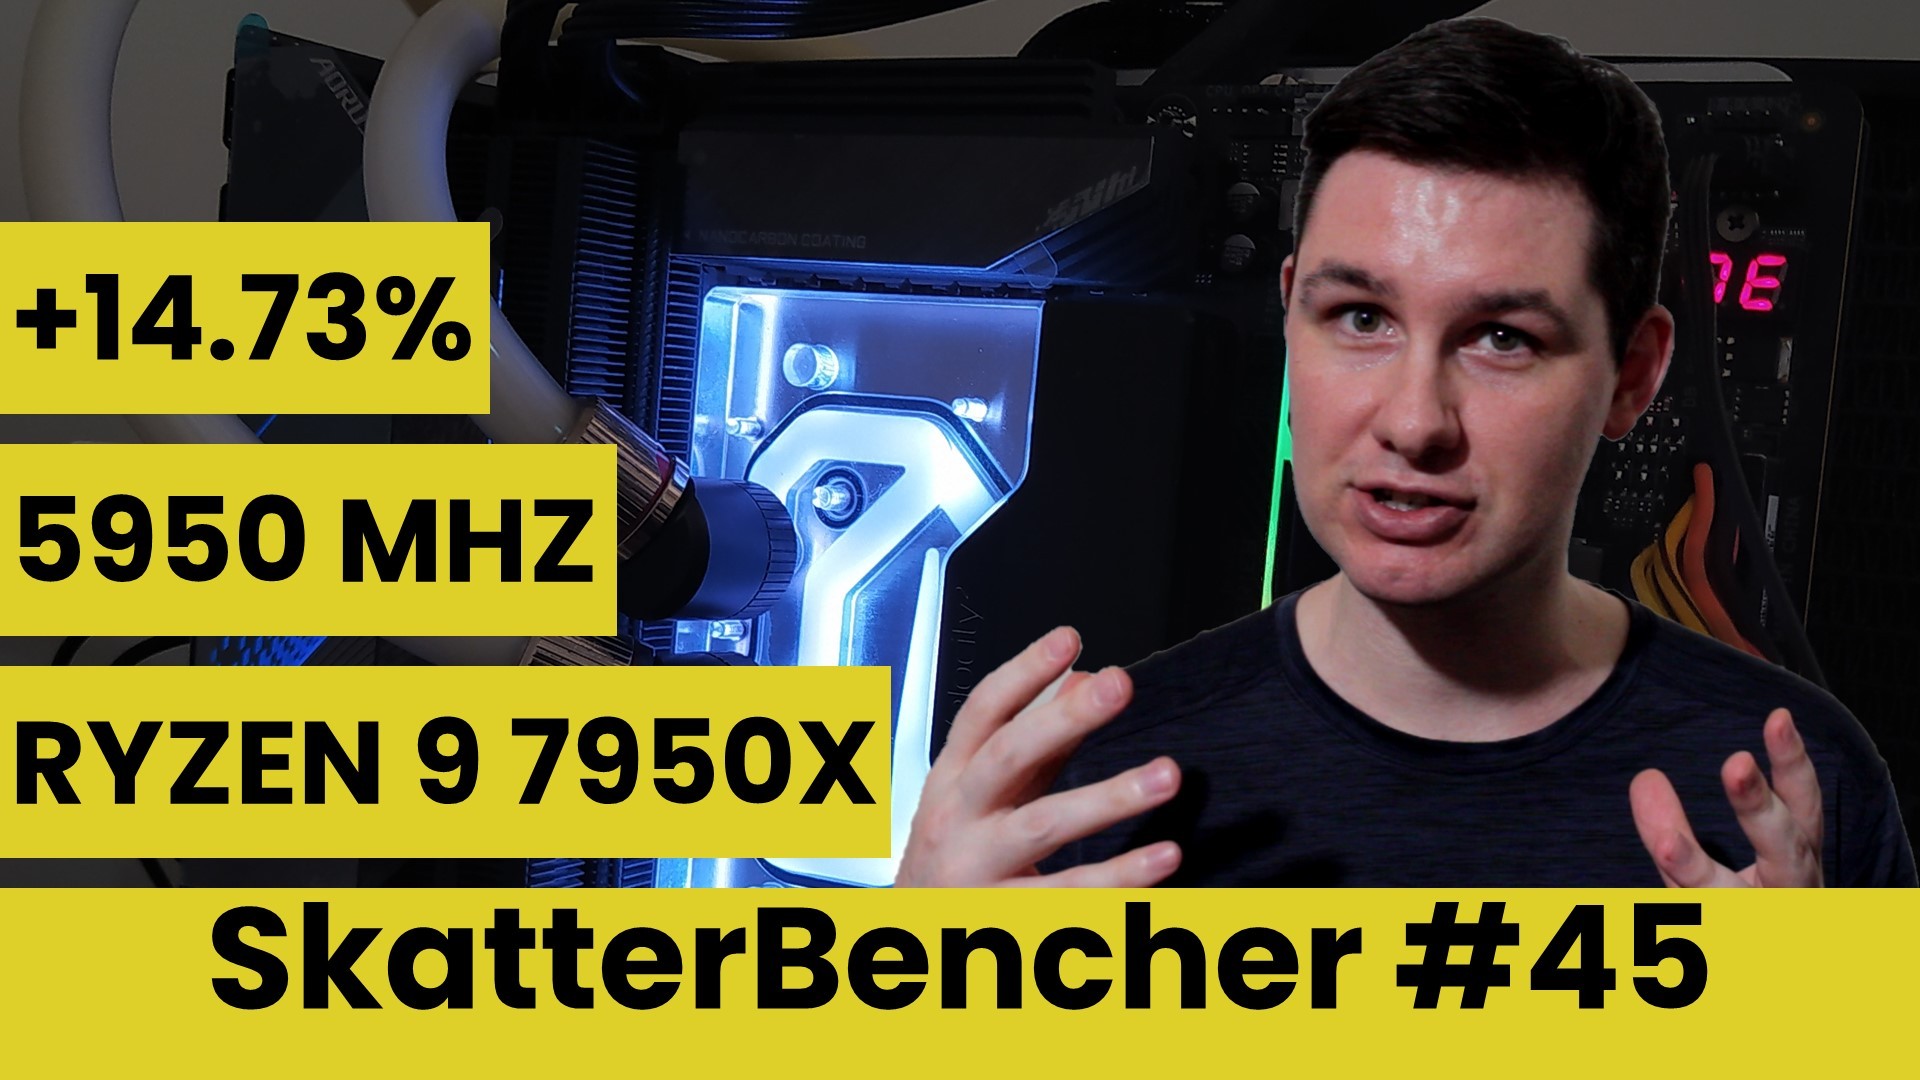 SkatterBencher #45: AMD Ryzen 9 7950X Overclocked to 5950 MHz